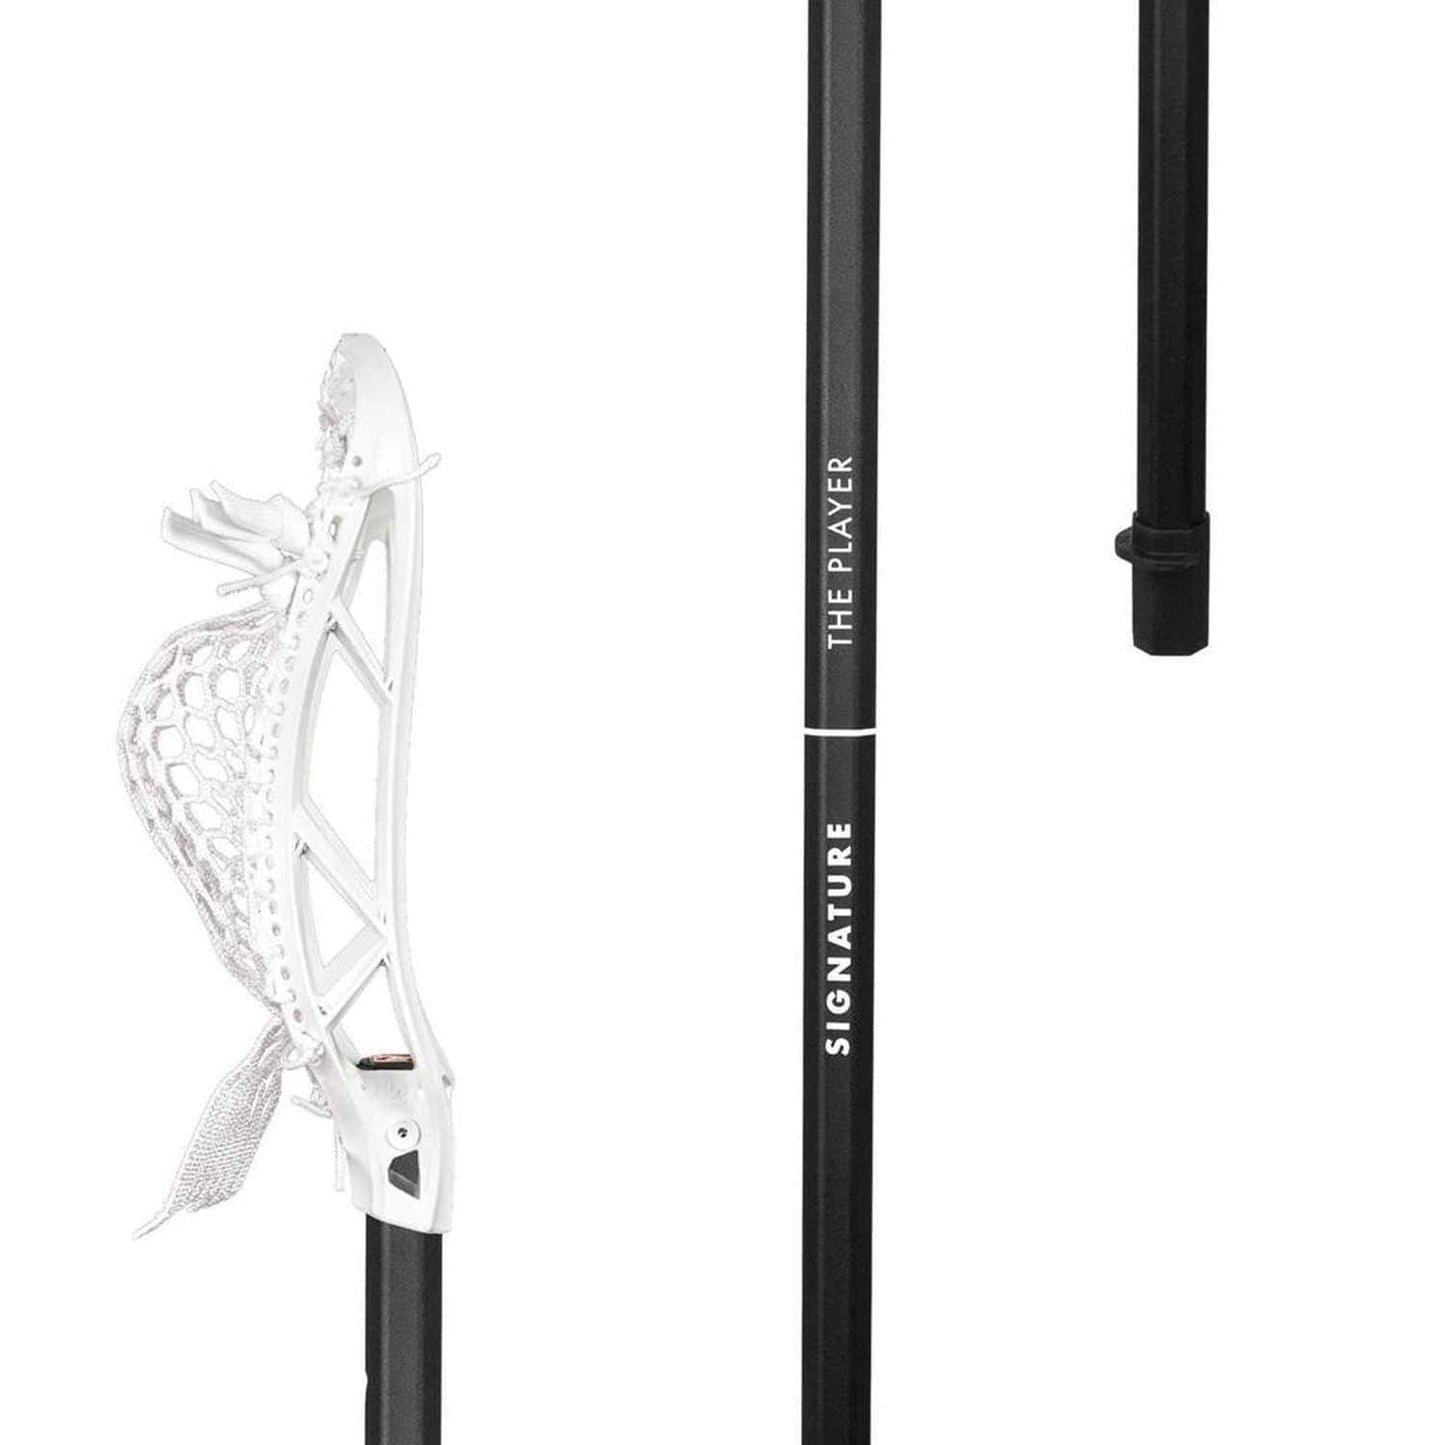 The Player - Complete Universal Lacrosse Stick for Men | Aluminum Signature Lacrosse